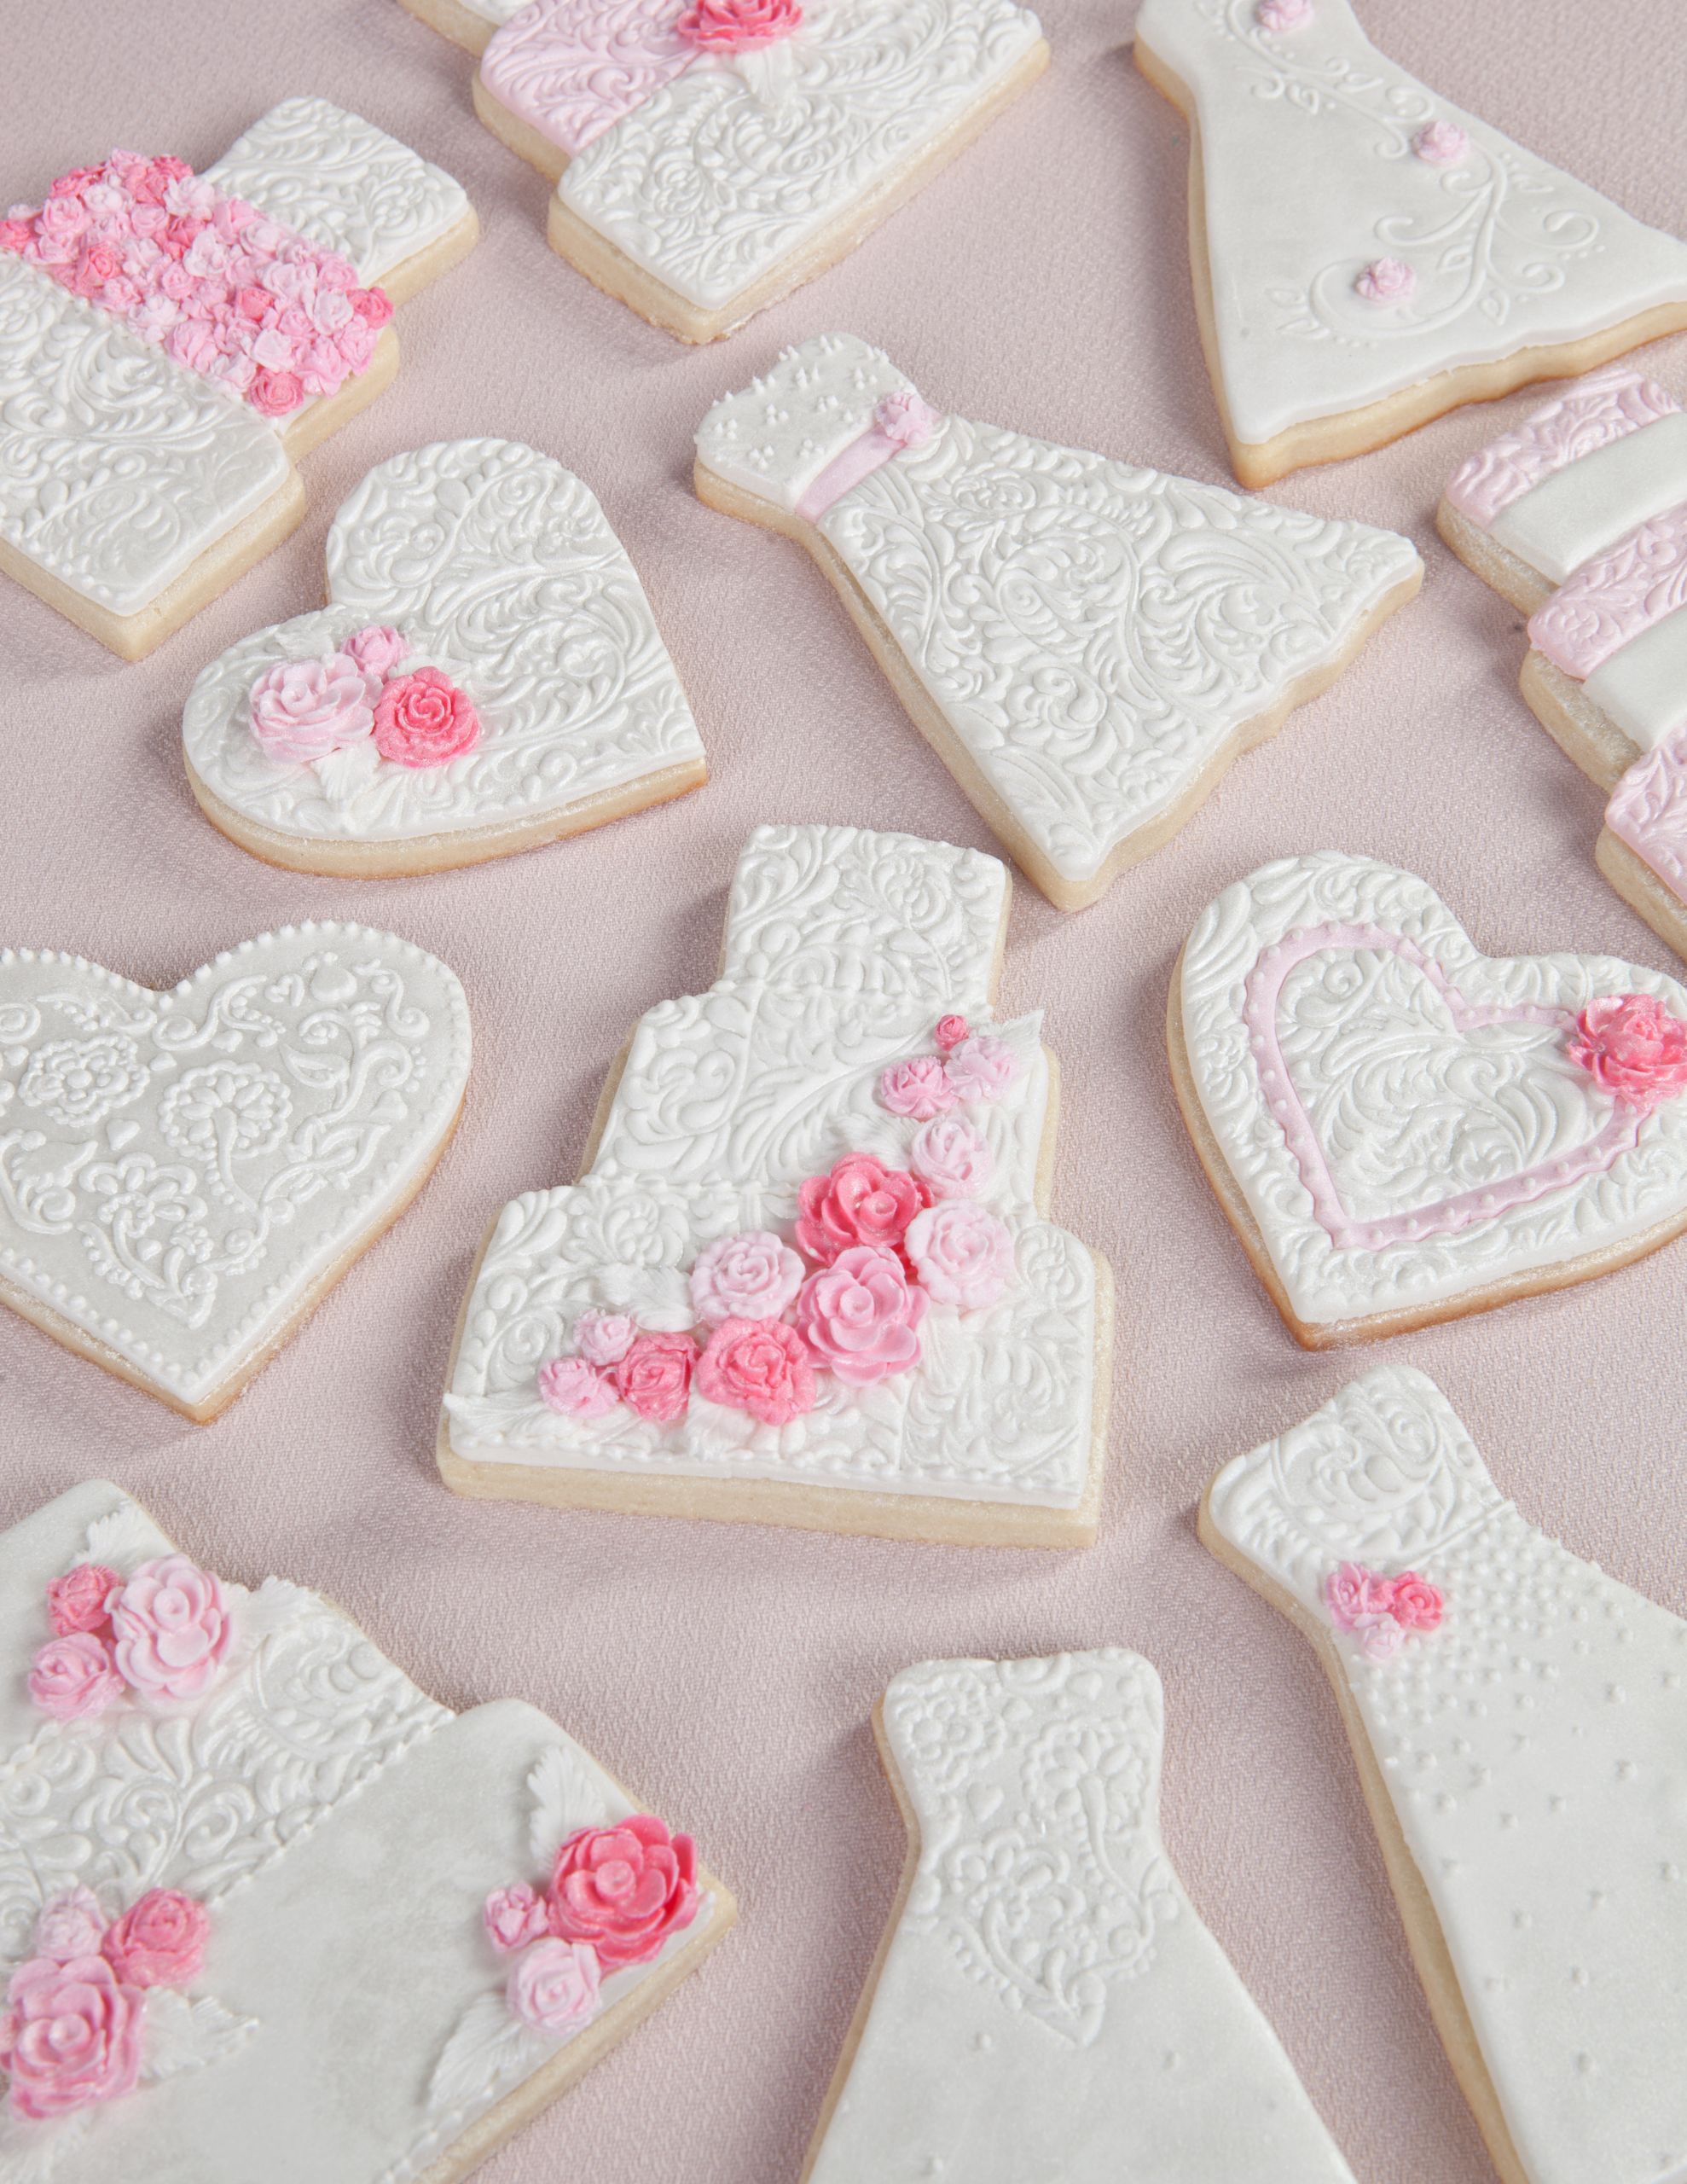 Decorated Wedding Cookies
 heart